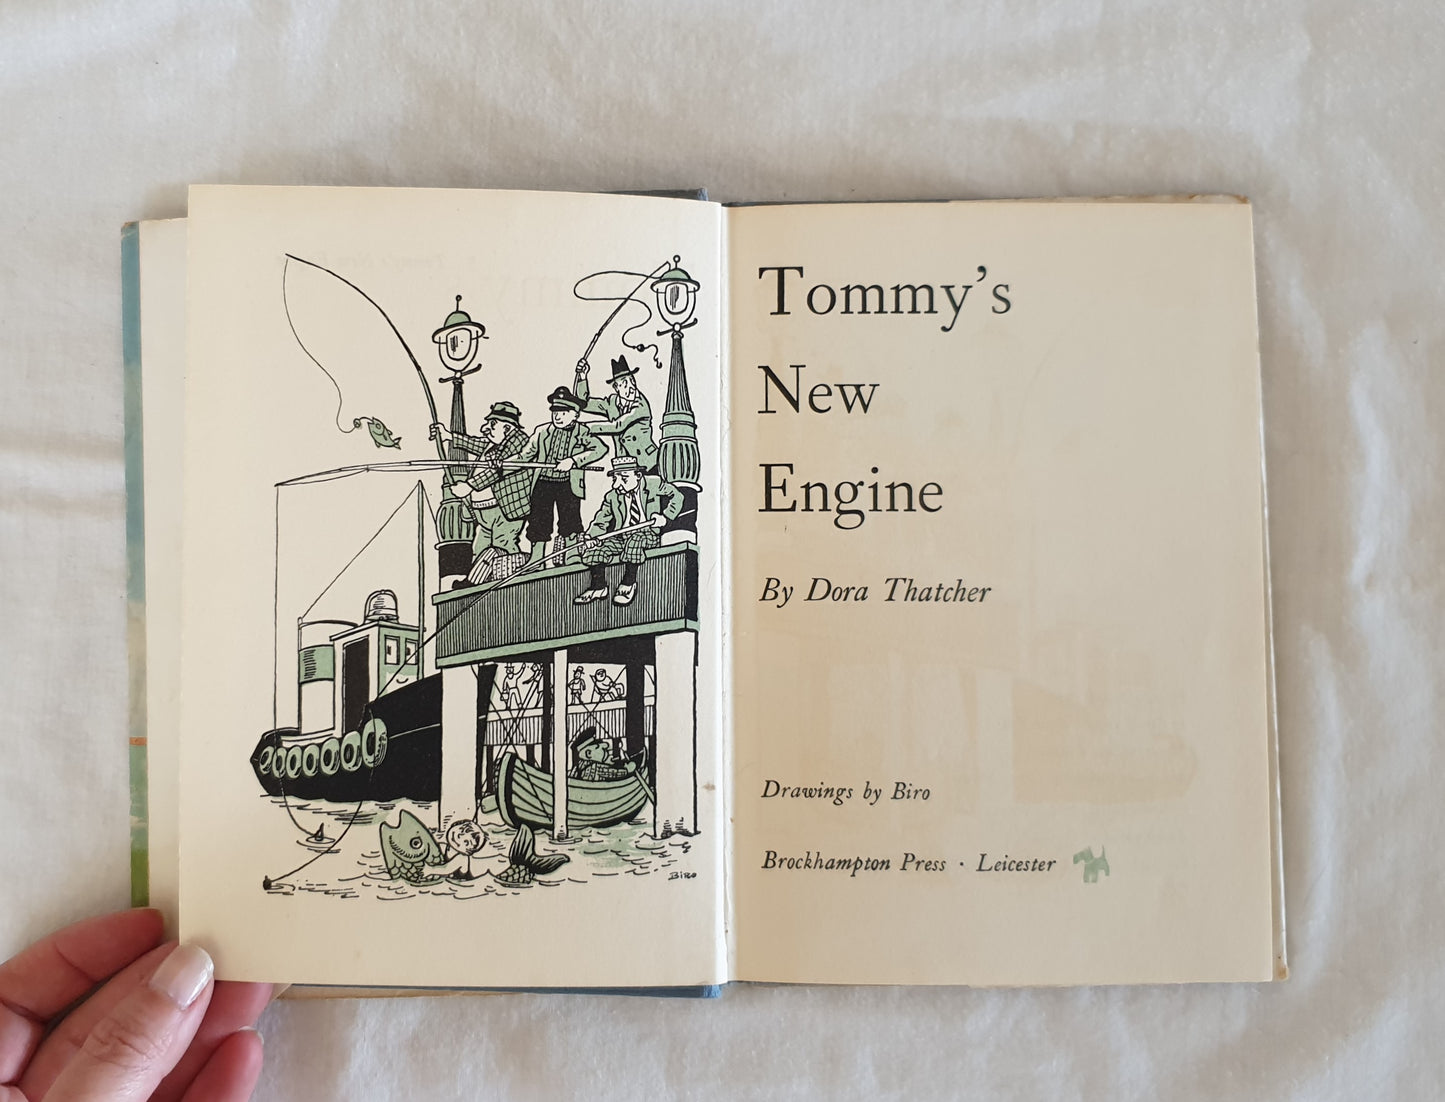 Tommy's New Engine by Dora Thatcher